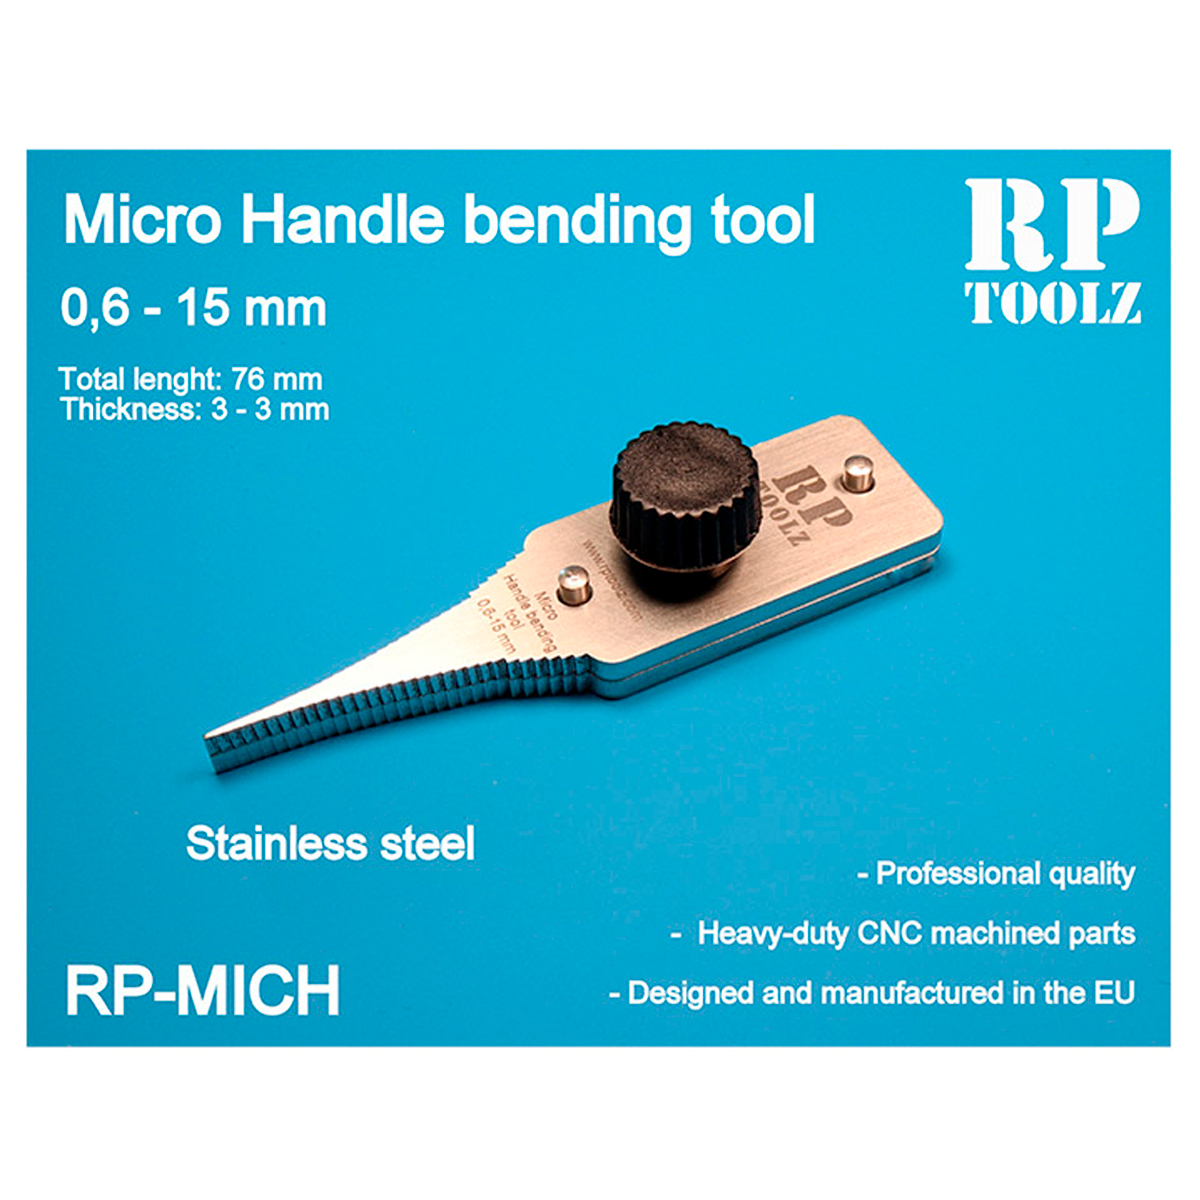 Micro Handle Bending Tool